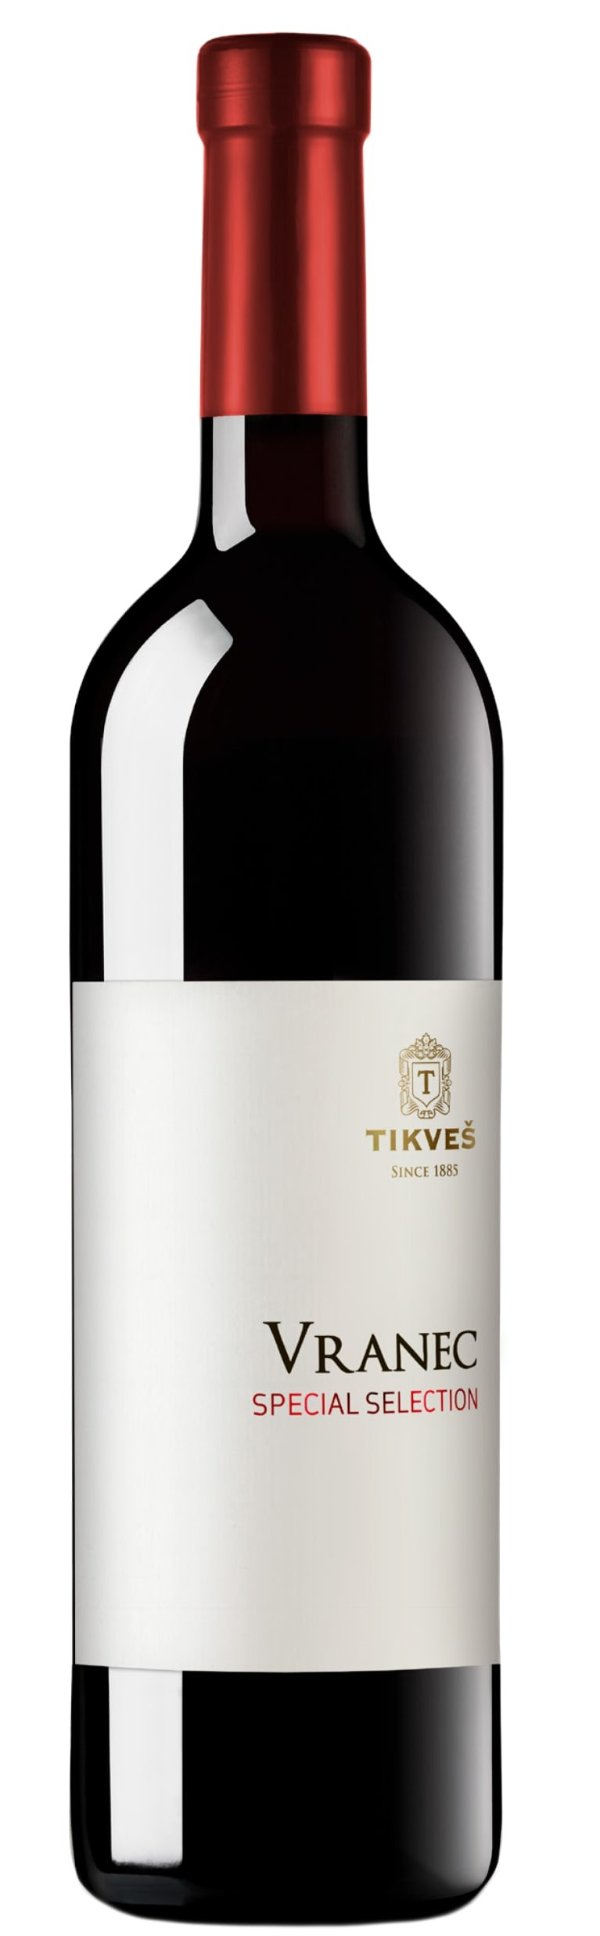 Tikves Vranec Special Selection 2018 红葡萄酒